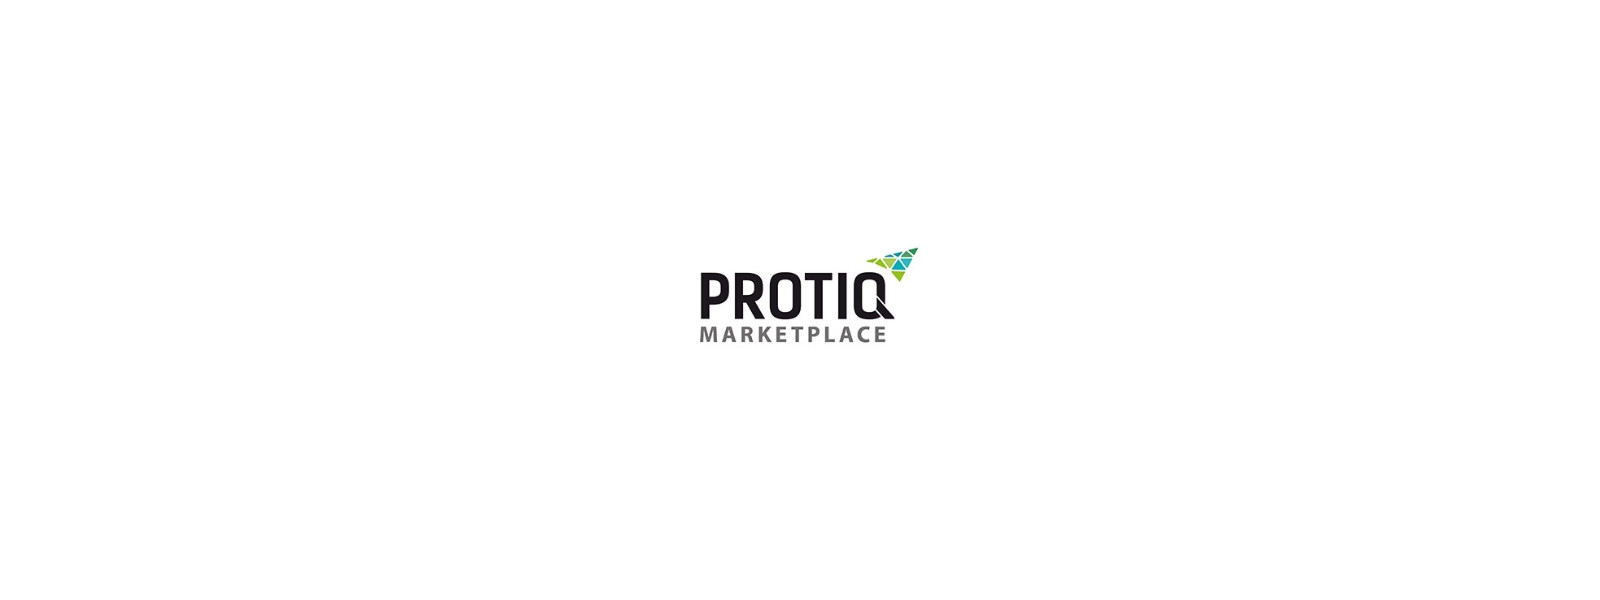 PROTIQ Marketplace welcomes Ricoh 3D